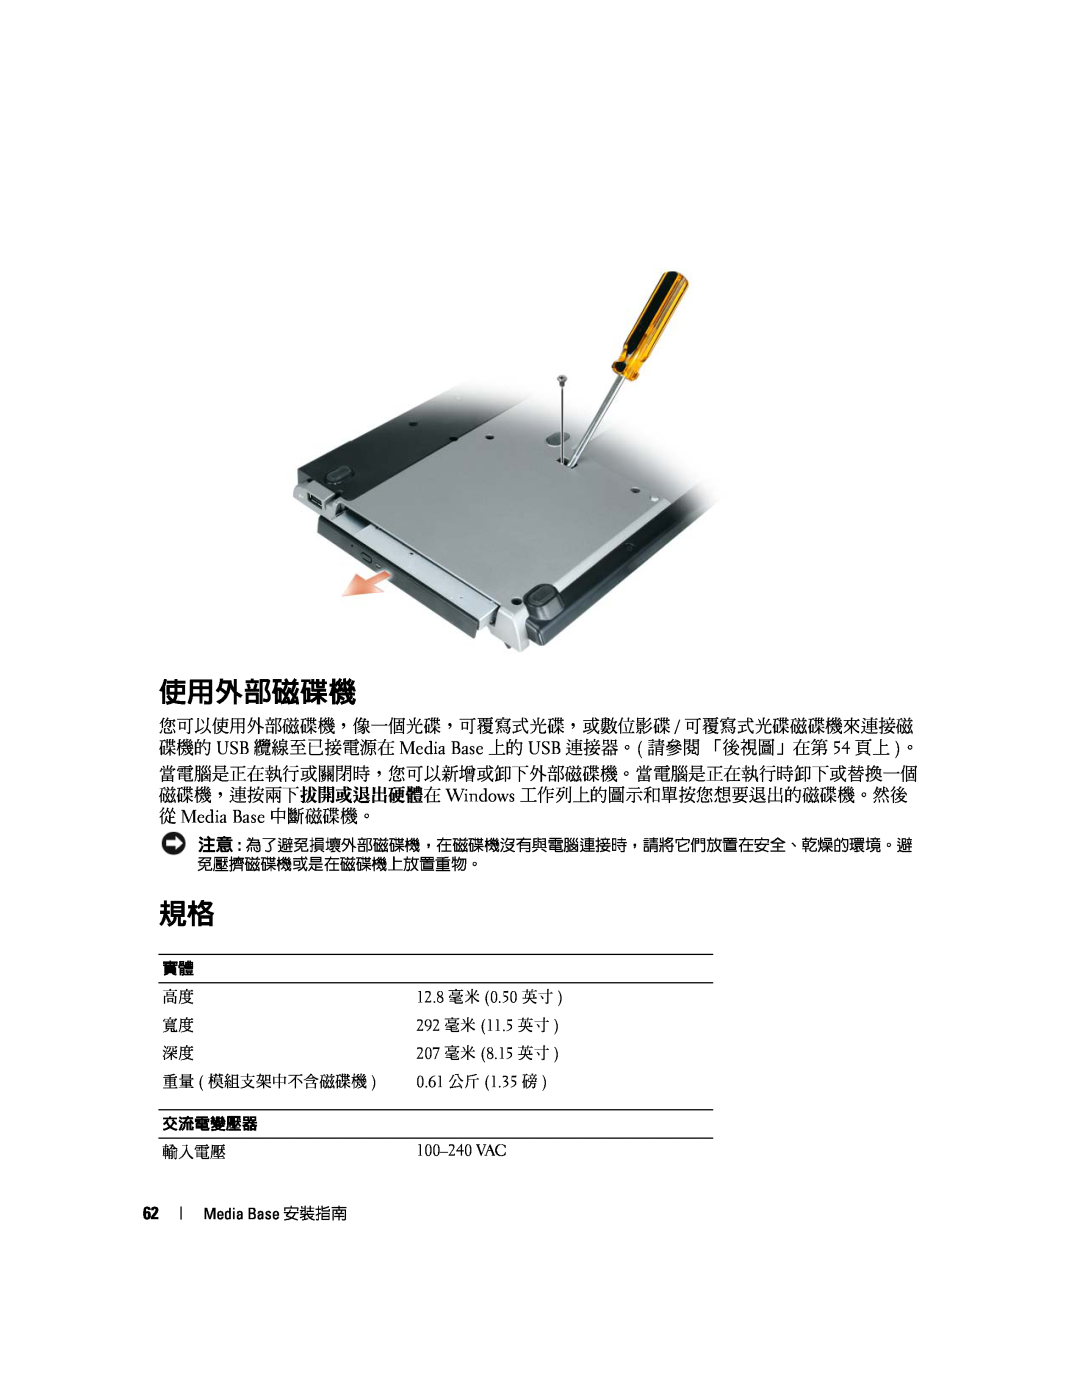 Dell Model PR09S setup guide 使用外部磁碟機, 從 Media Base 中斷磁碟機。 